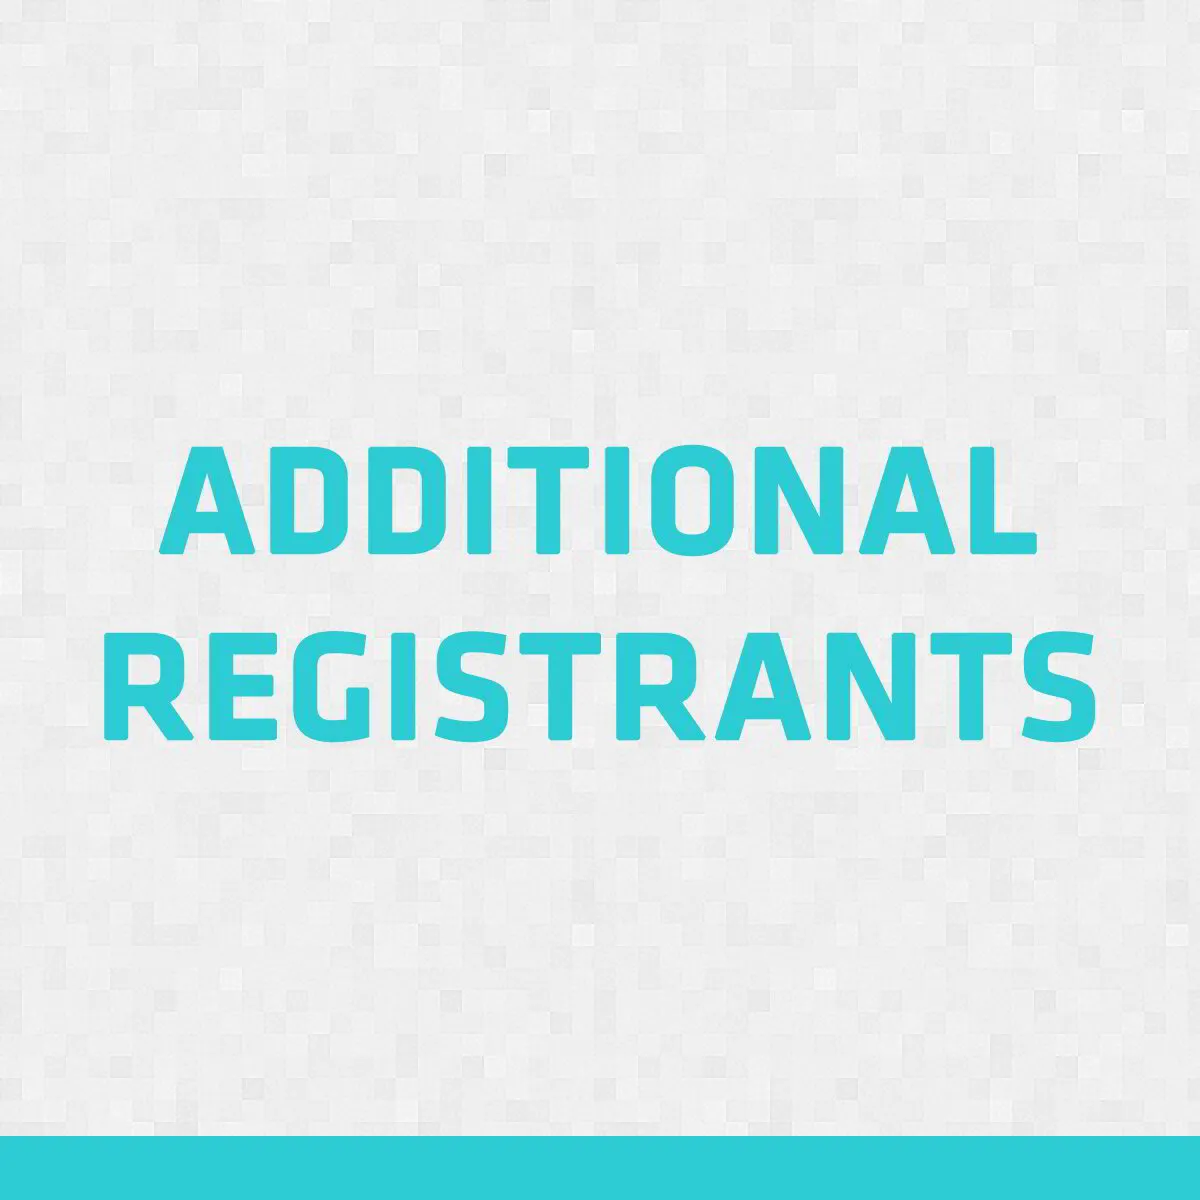 Additional Registrants